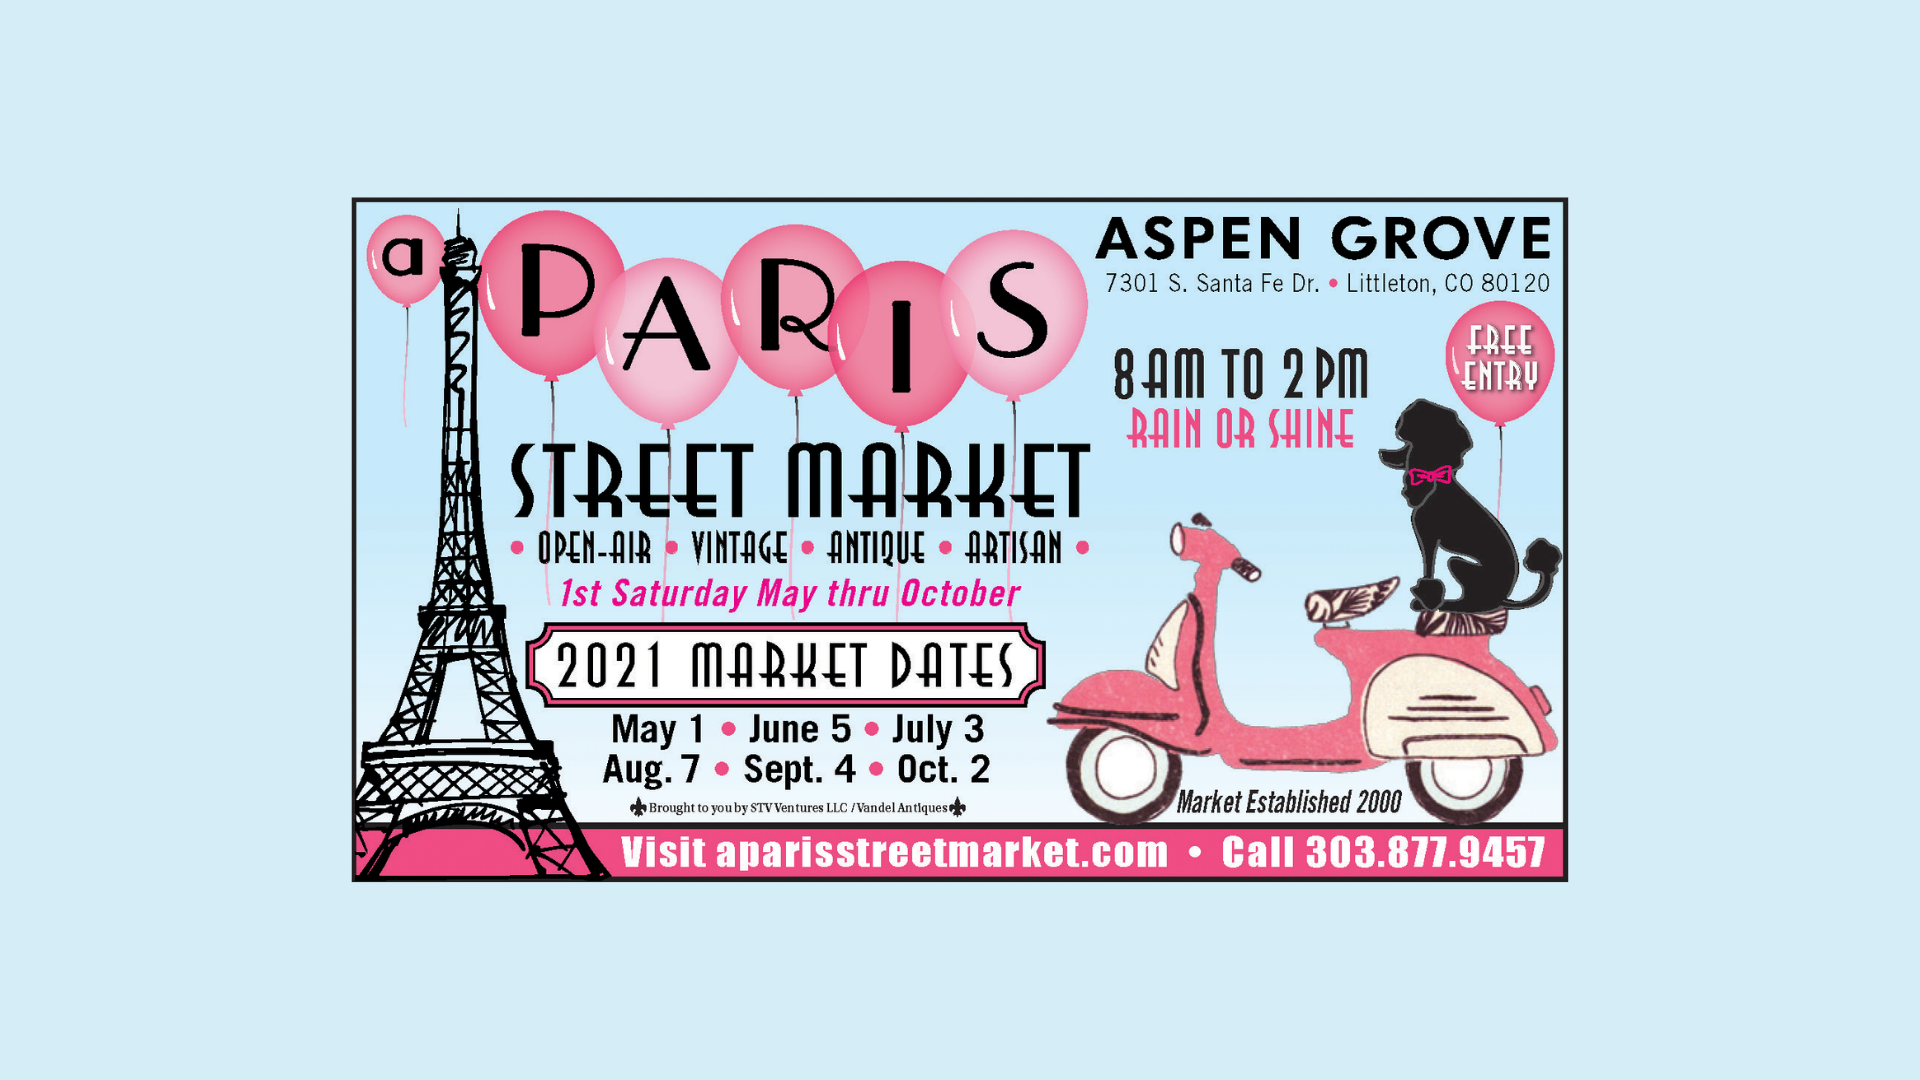 A Paris Street Market at Aspen Grove